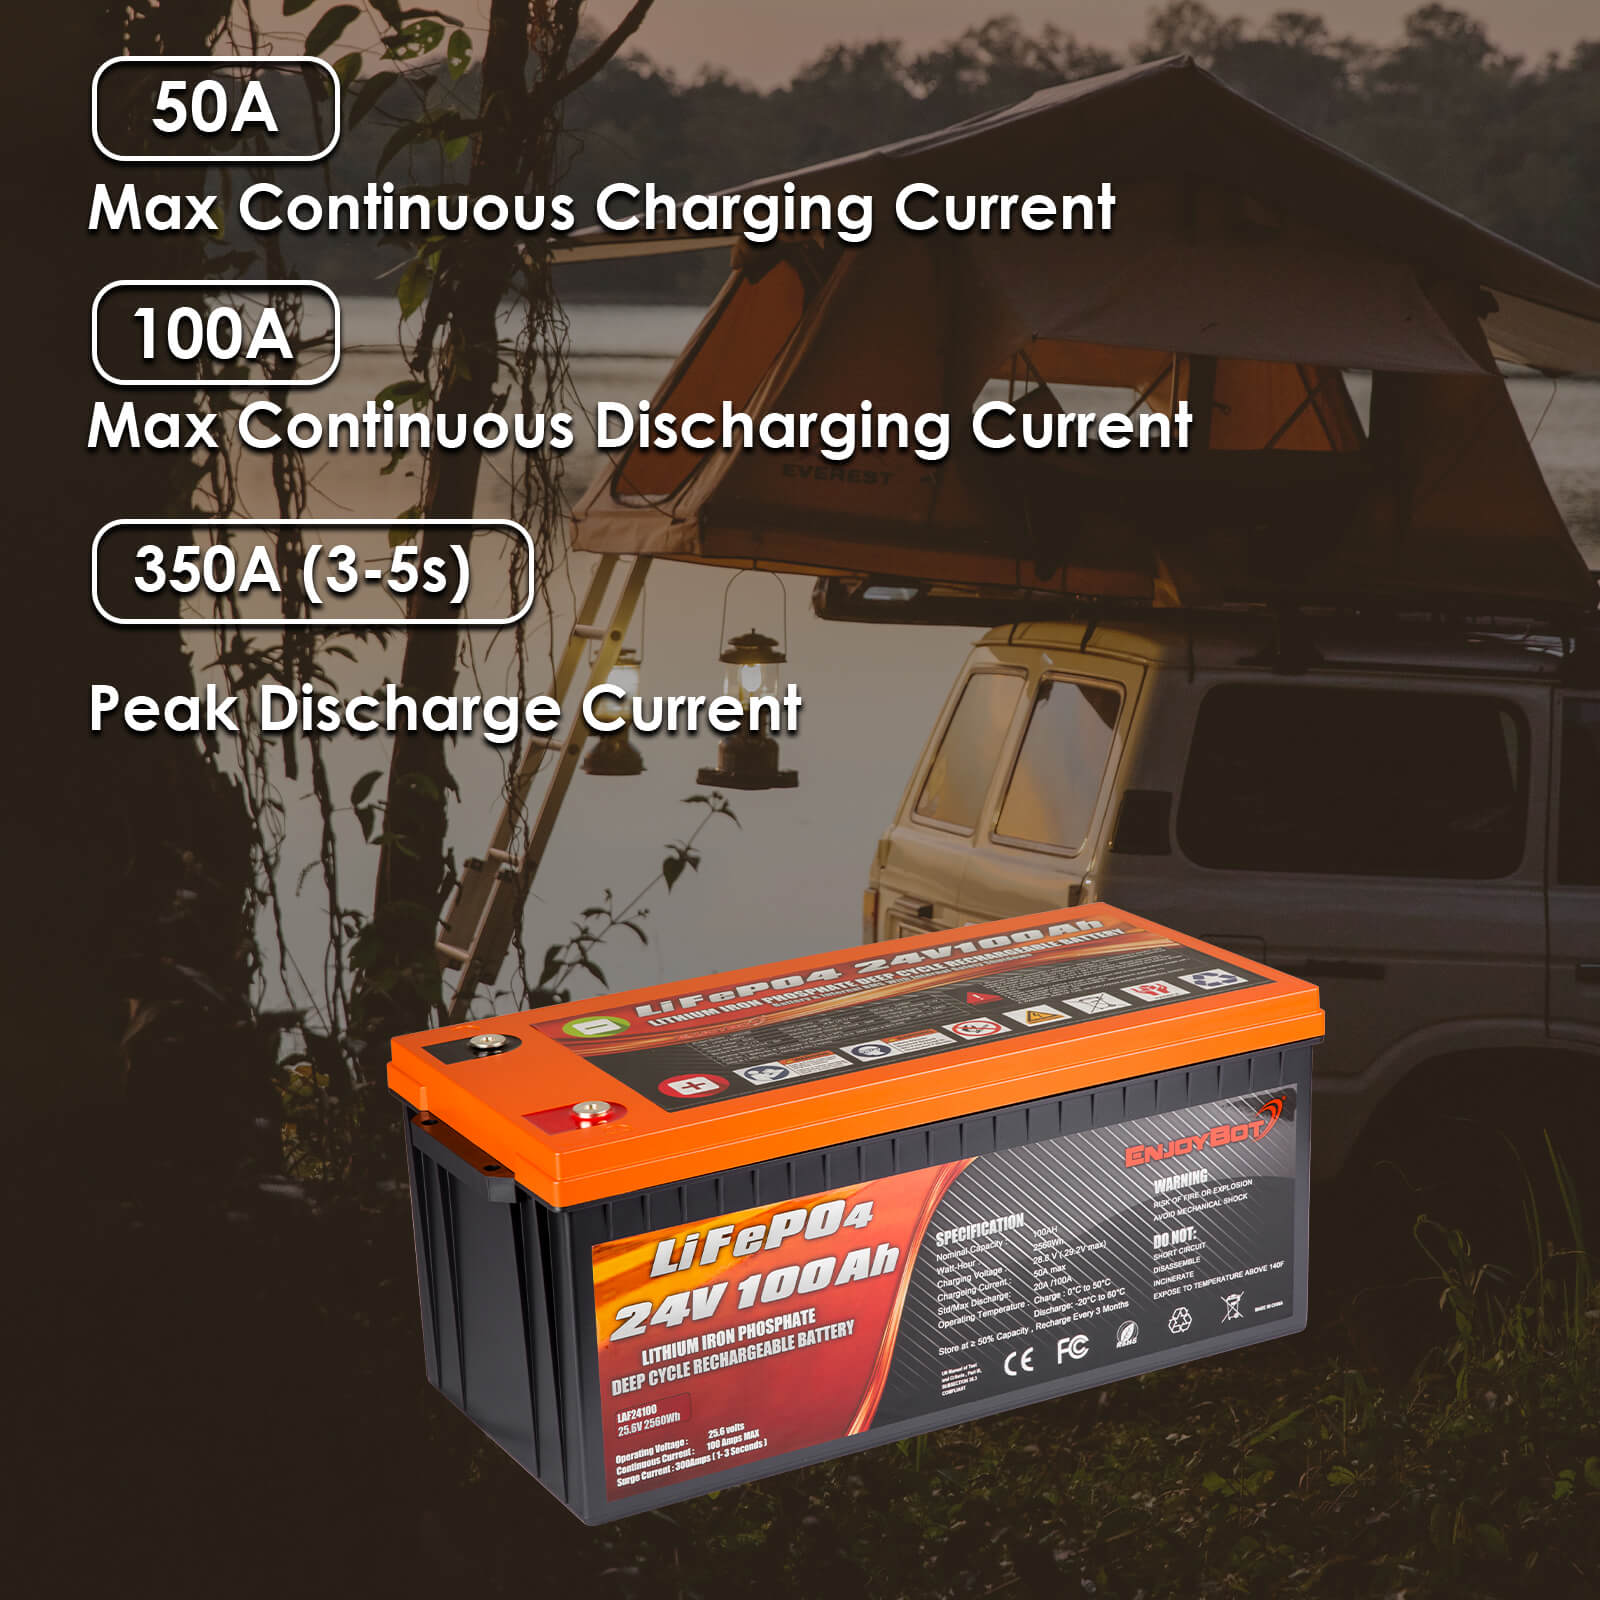 Enjoybot 24v 100ah LiFePO4 Battery - Max Current